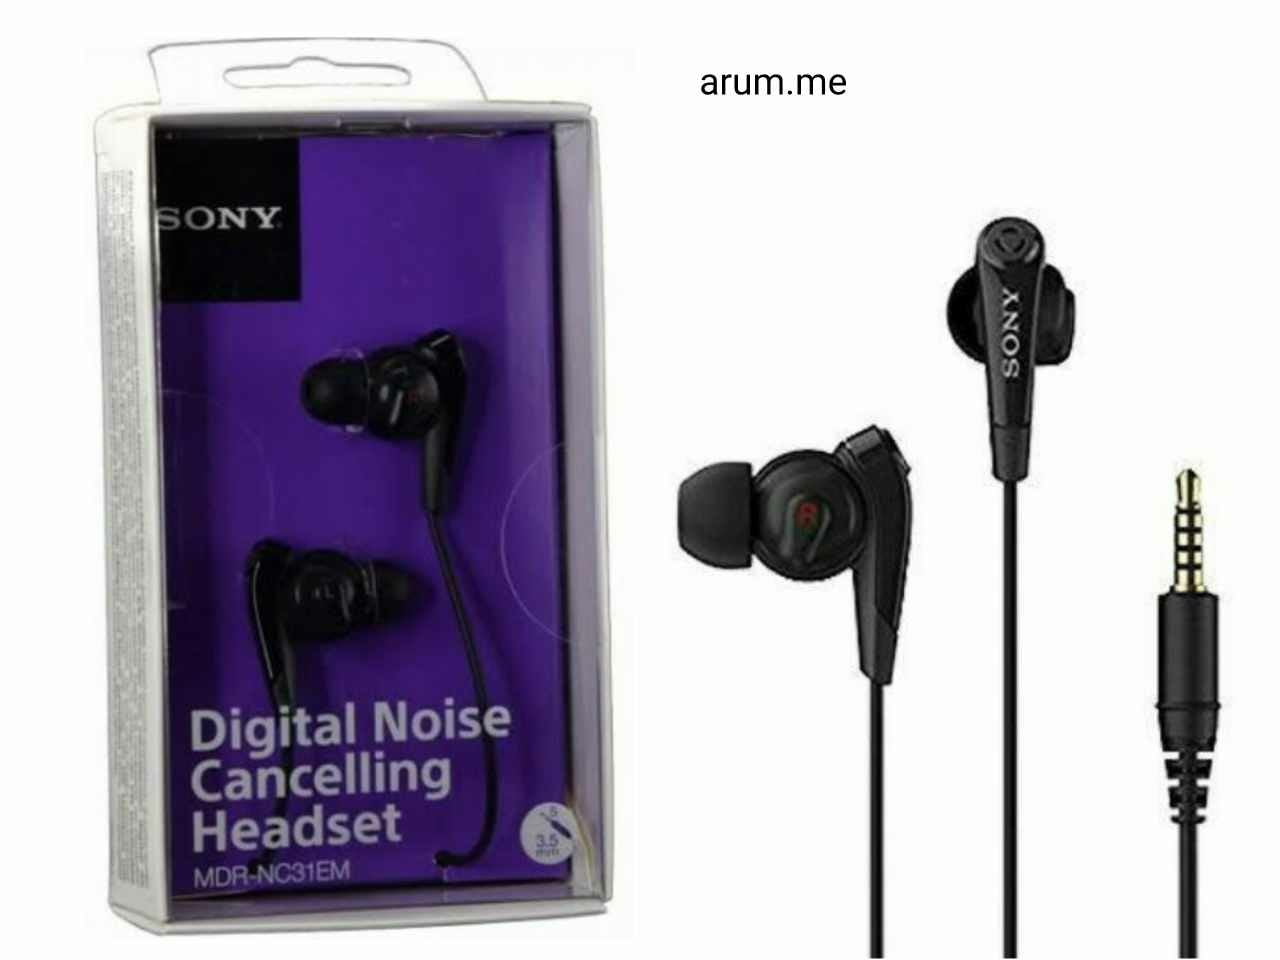 Digital Noise Cancelling Headset Sony MDR-NC31EM | arum.me 